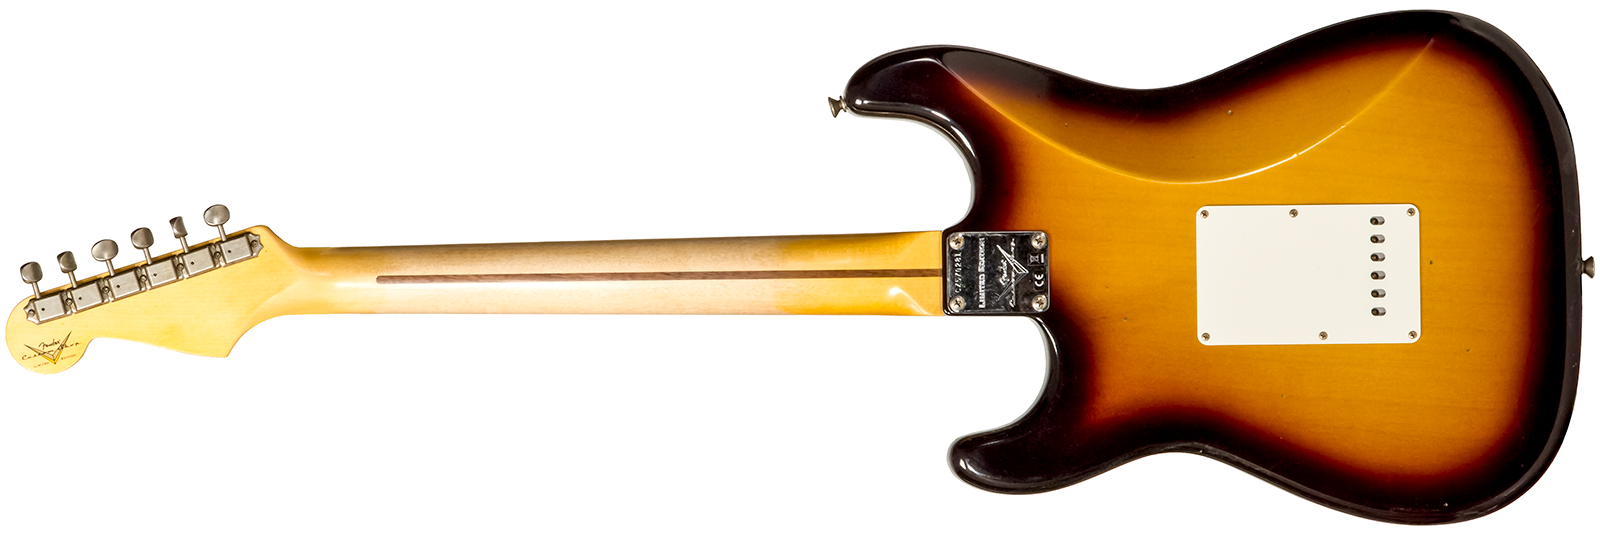 Fender Custom Shop Strat 1956 3s Trem Mn #cz570281 - Journeyman Relic Aged 2-color Sunburst - Guitare Électrique Forme Str - Variation 1